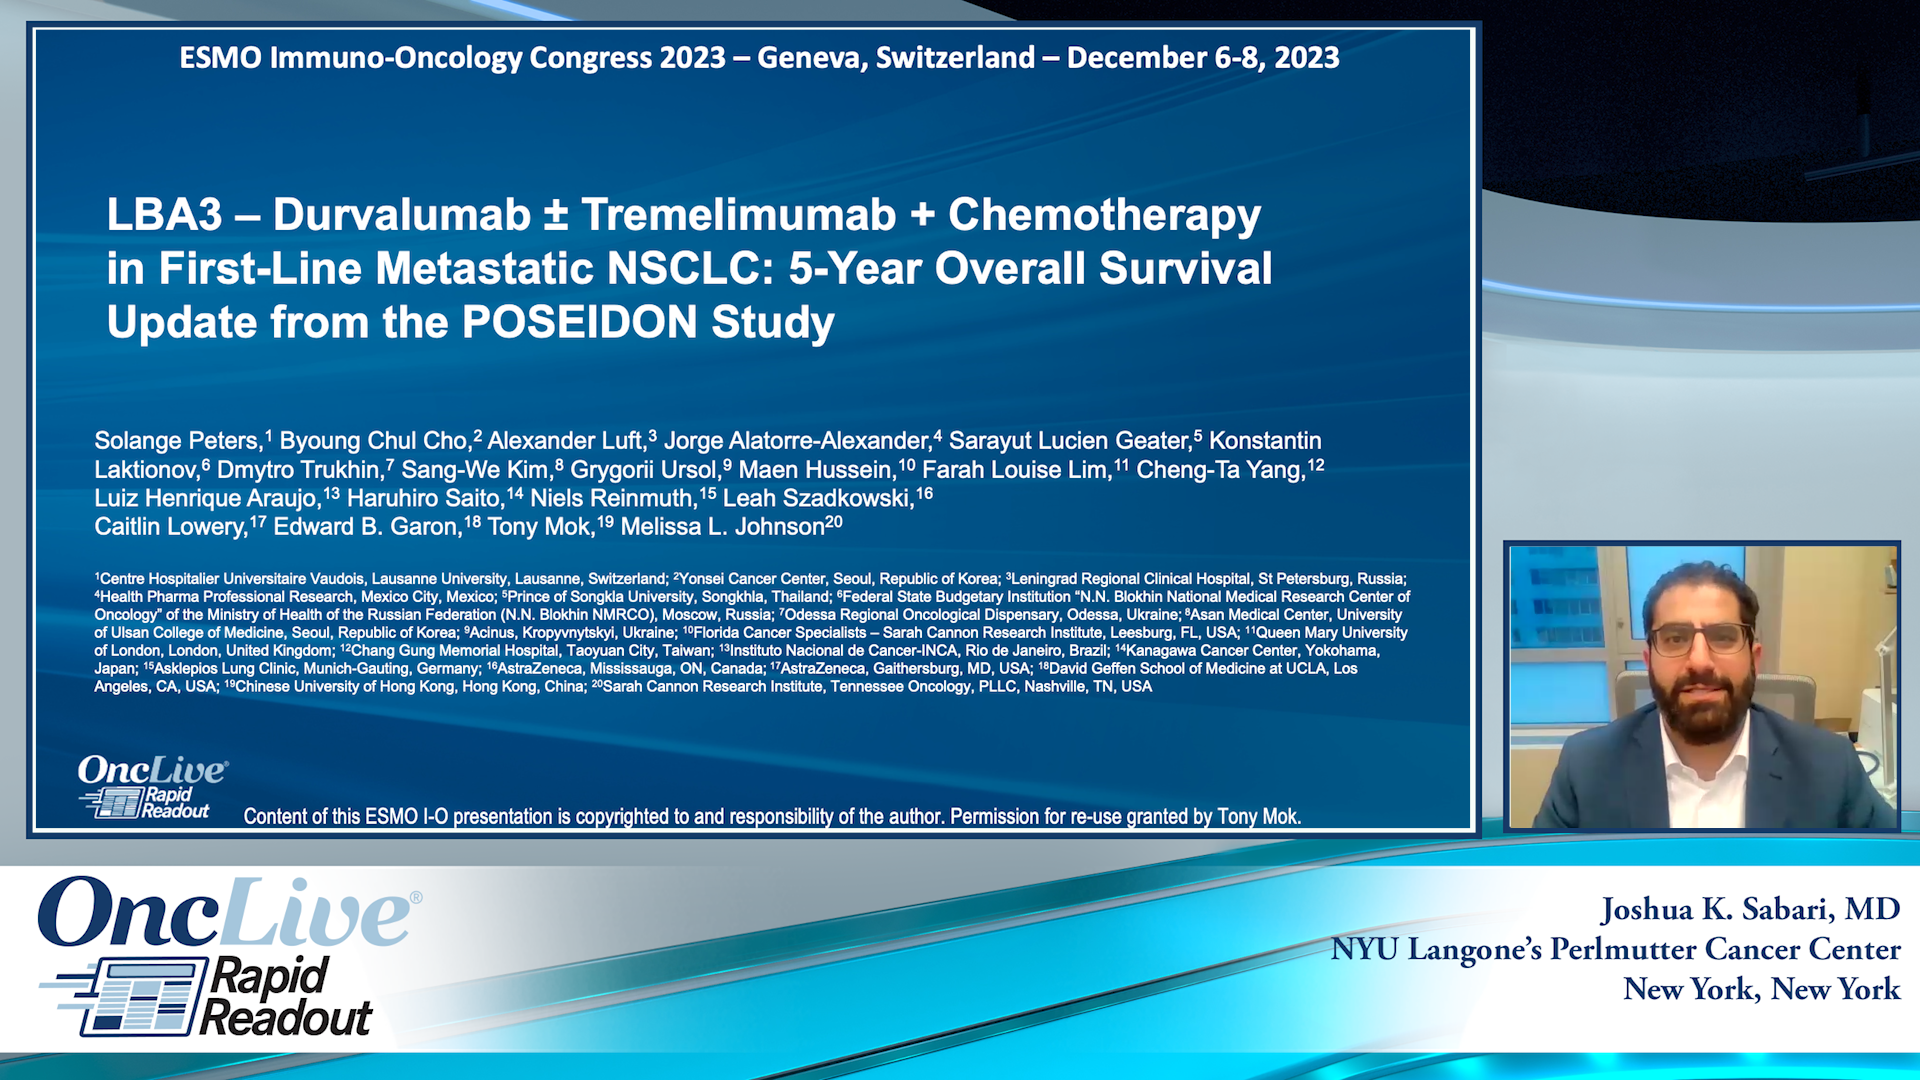 Joshua K. Sabari, MD, an expert on lung cancer, presenting slides